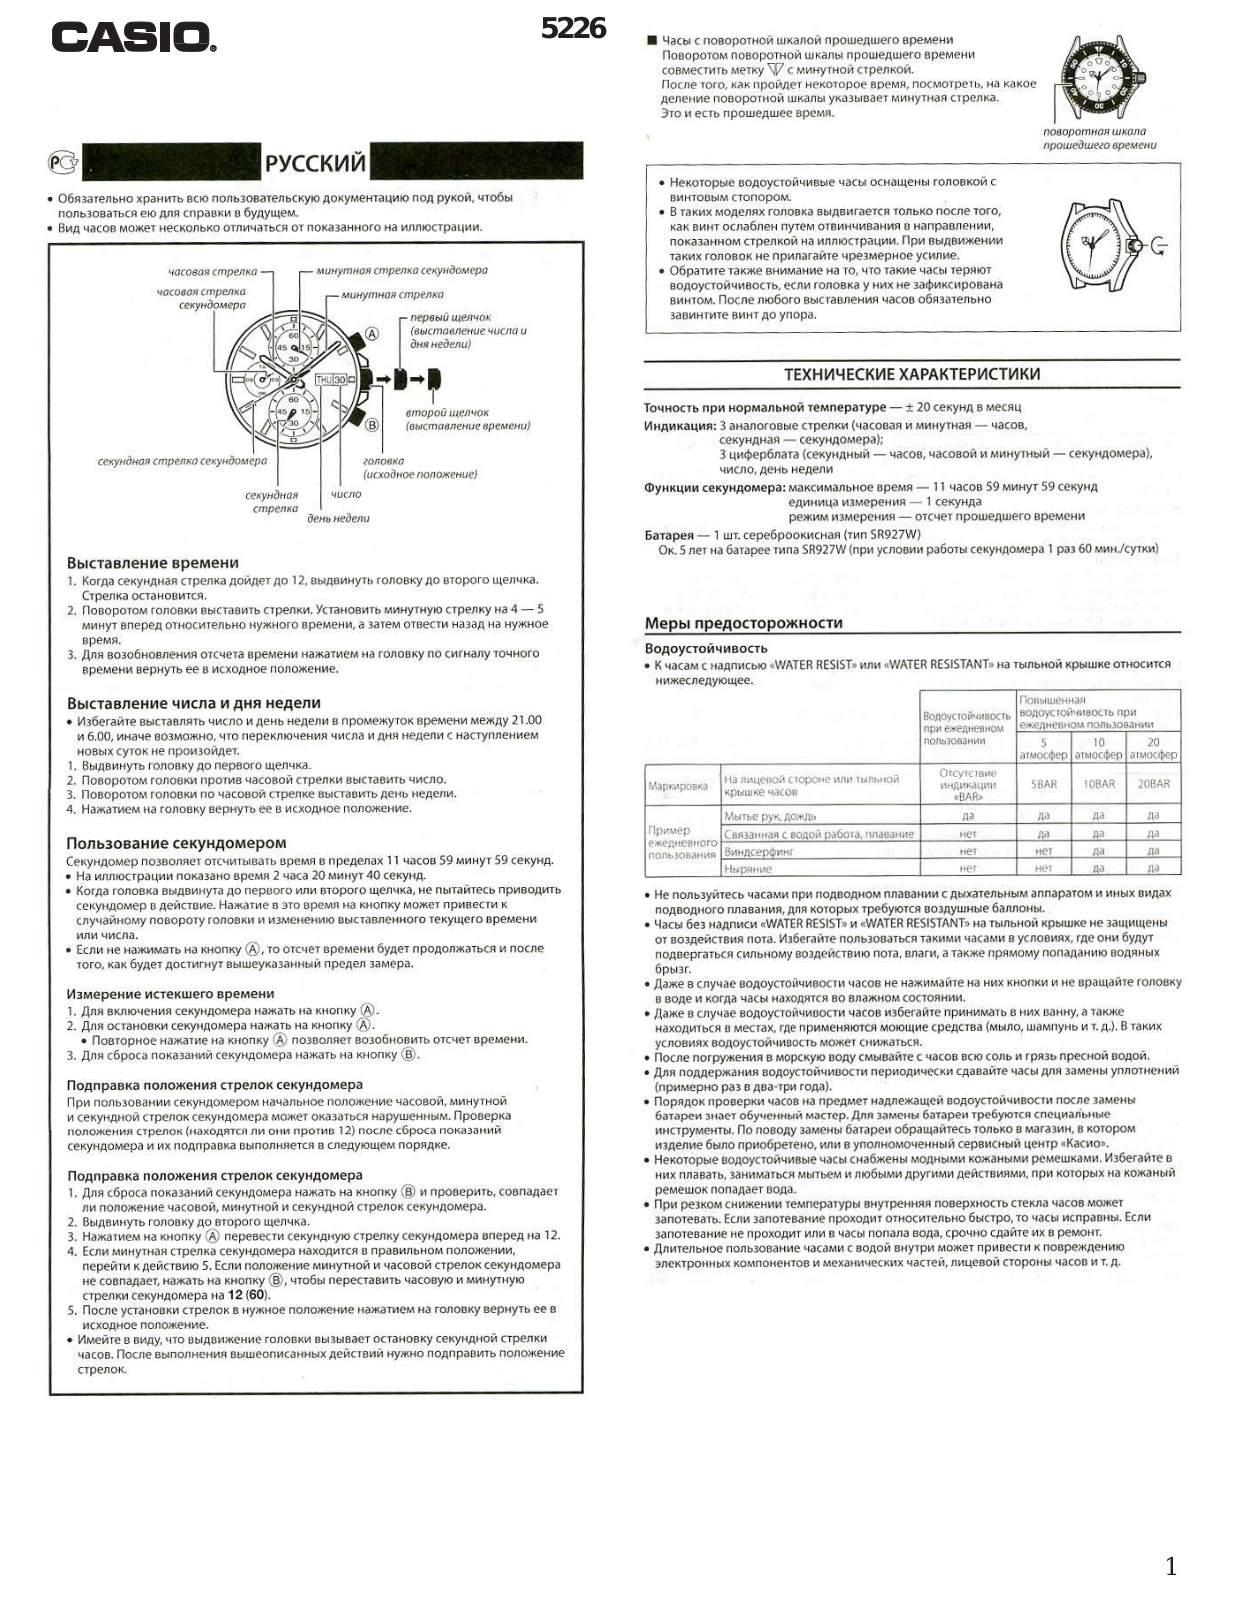 Casio EFR-549D-1A2 User Manual